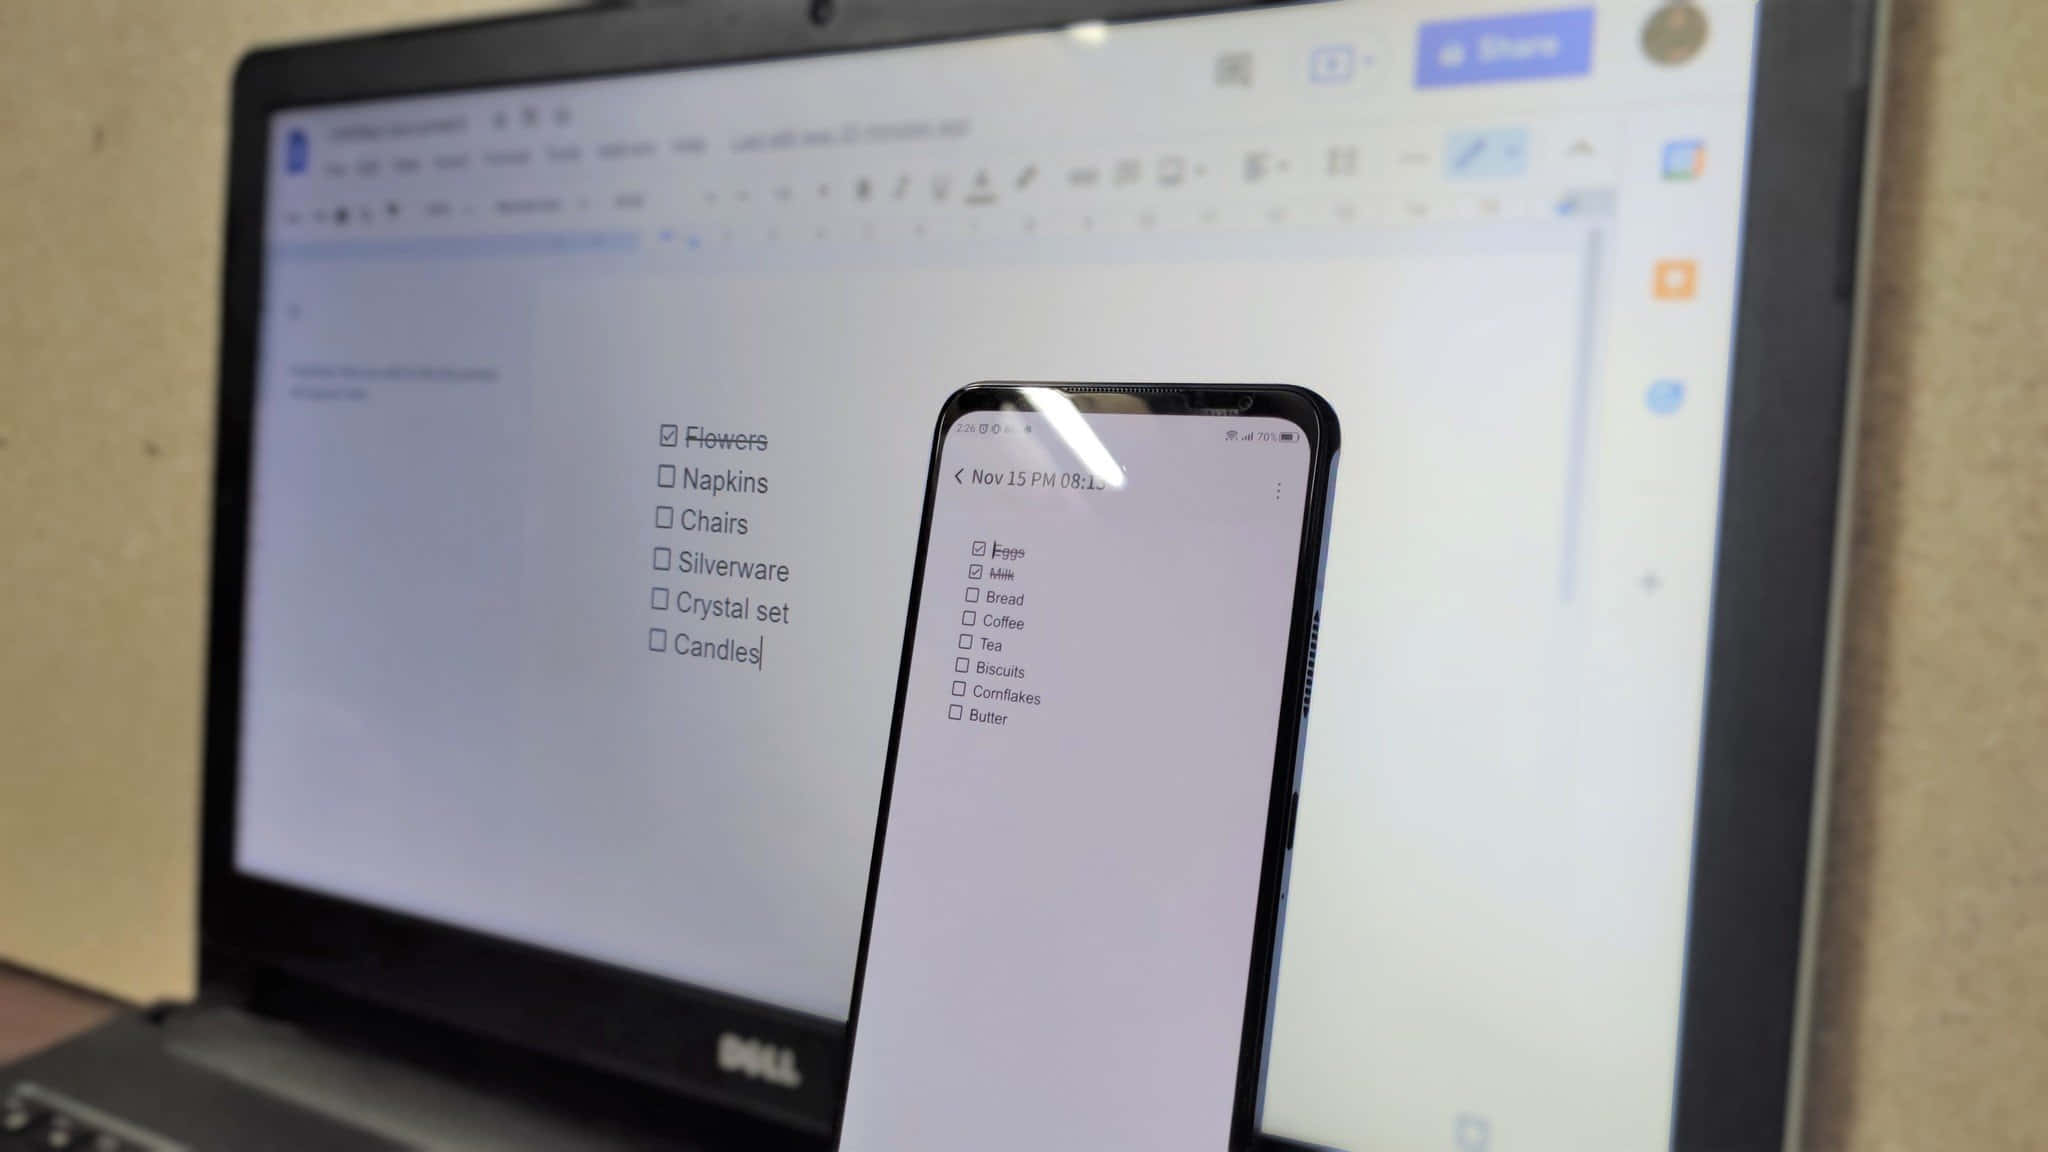 Google Docs interface on a laptop display